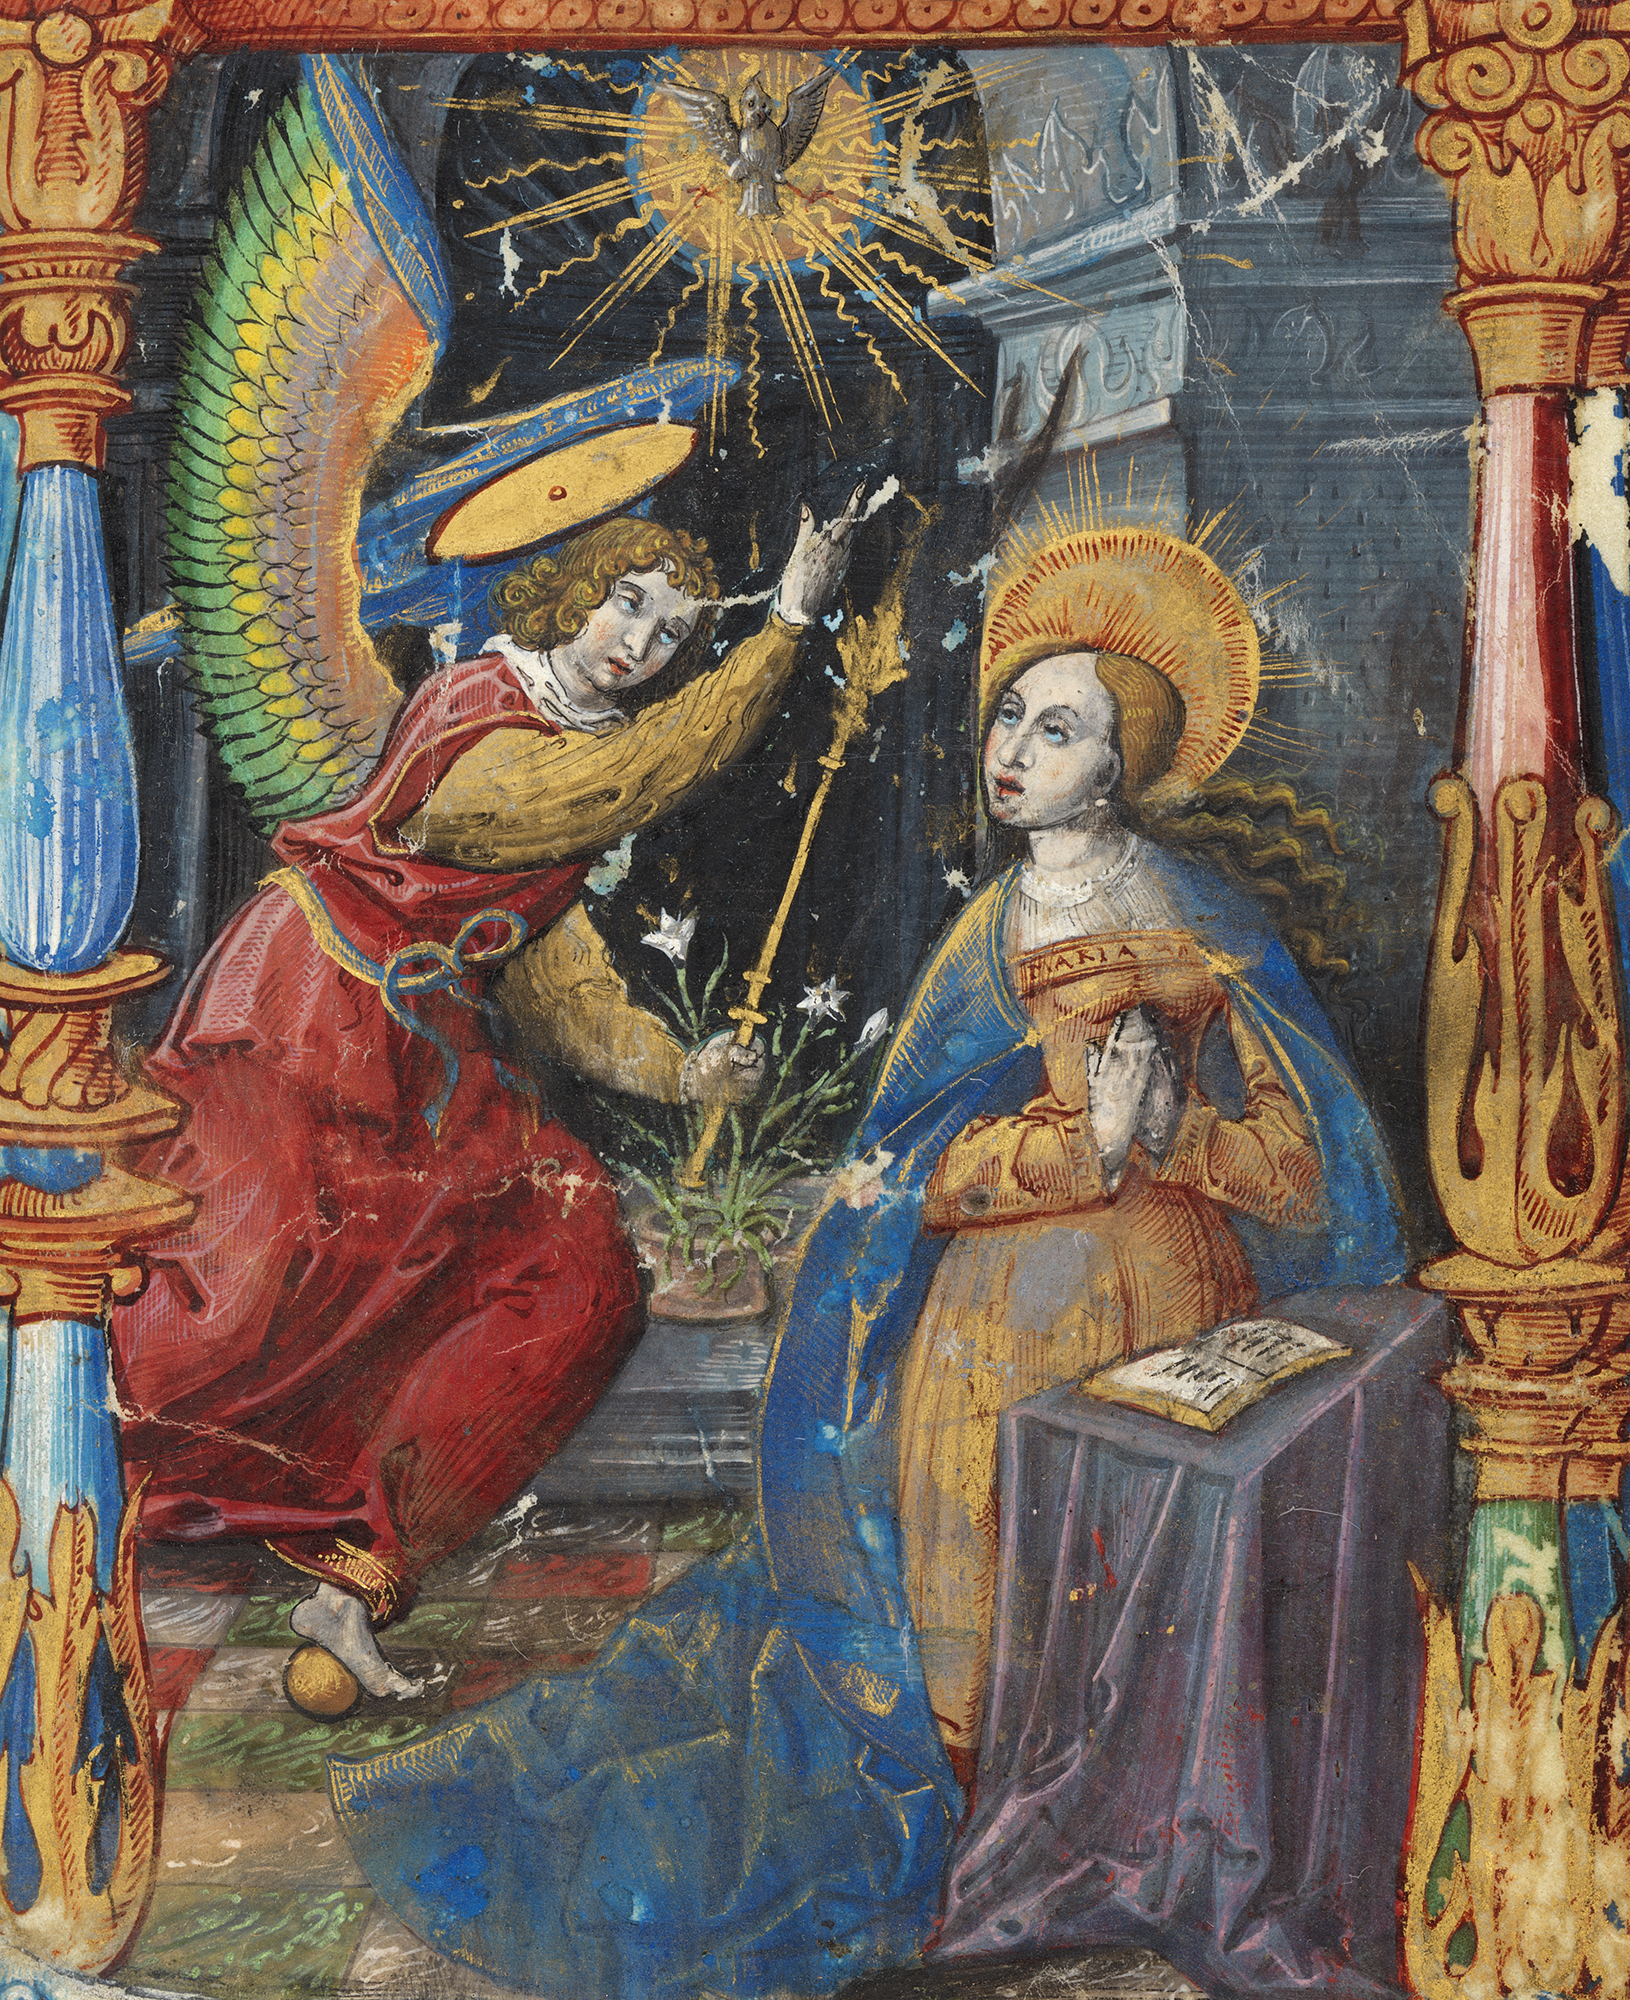 An illumination depicting a religious, Christian scene.